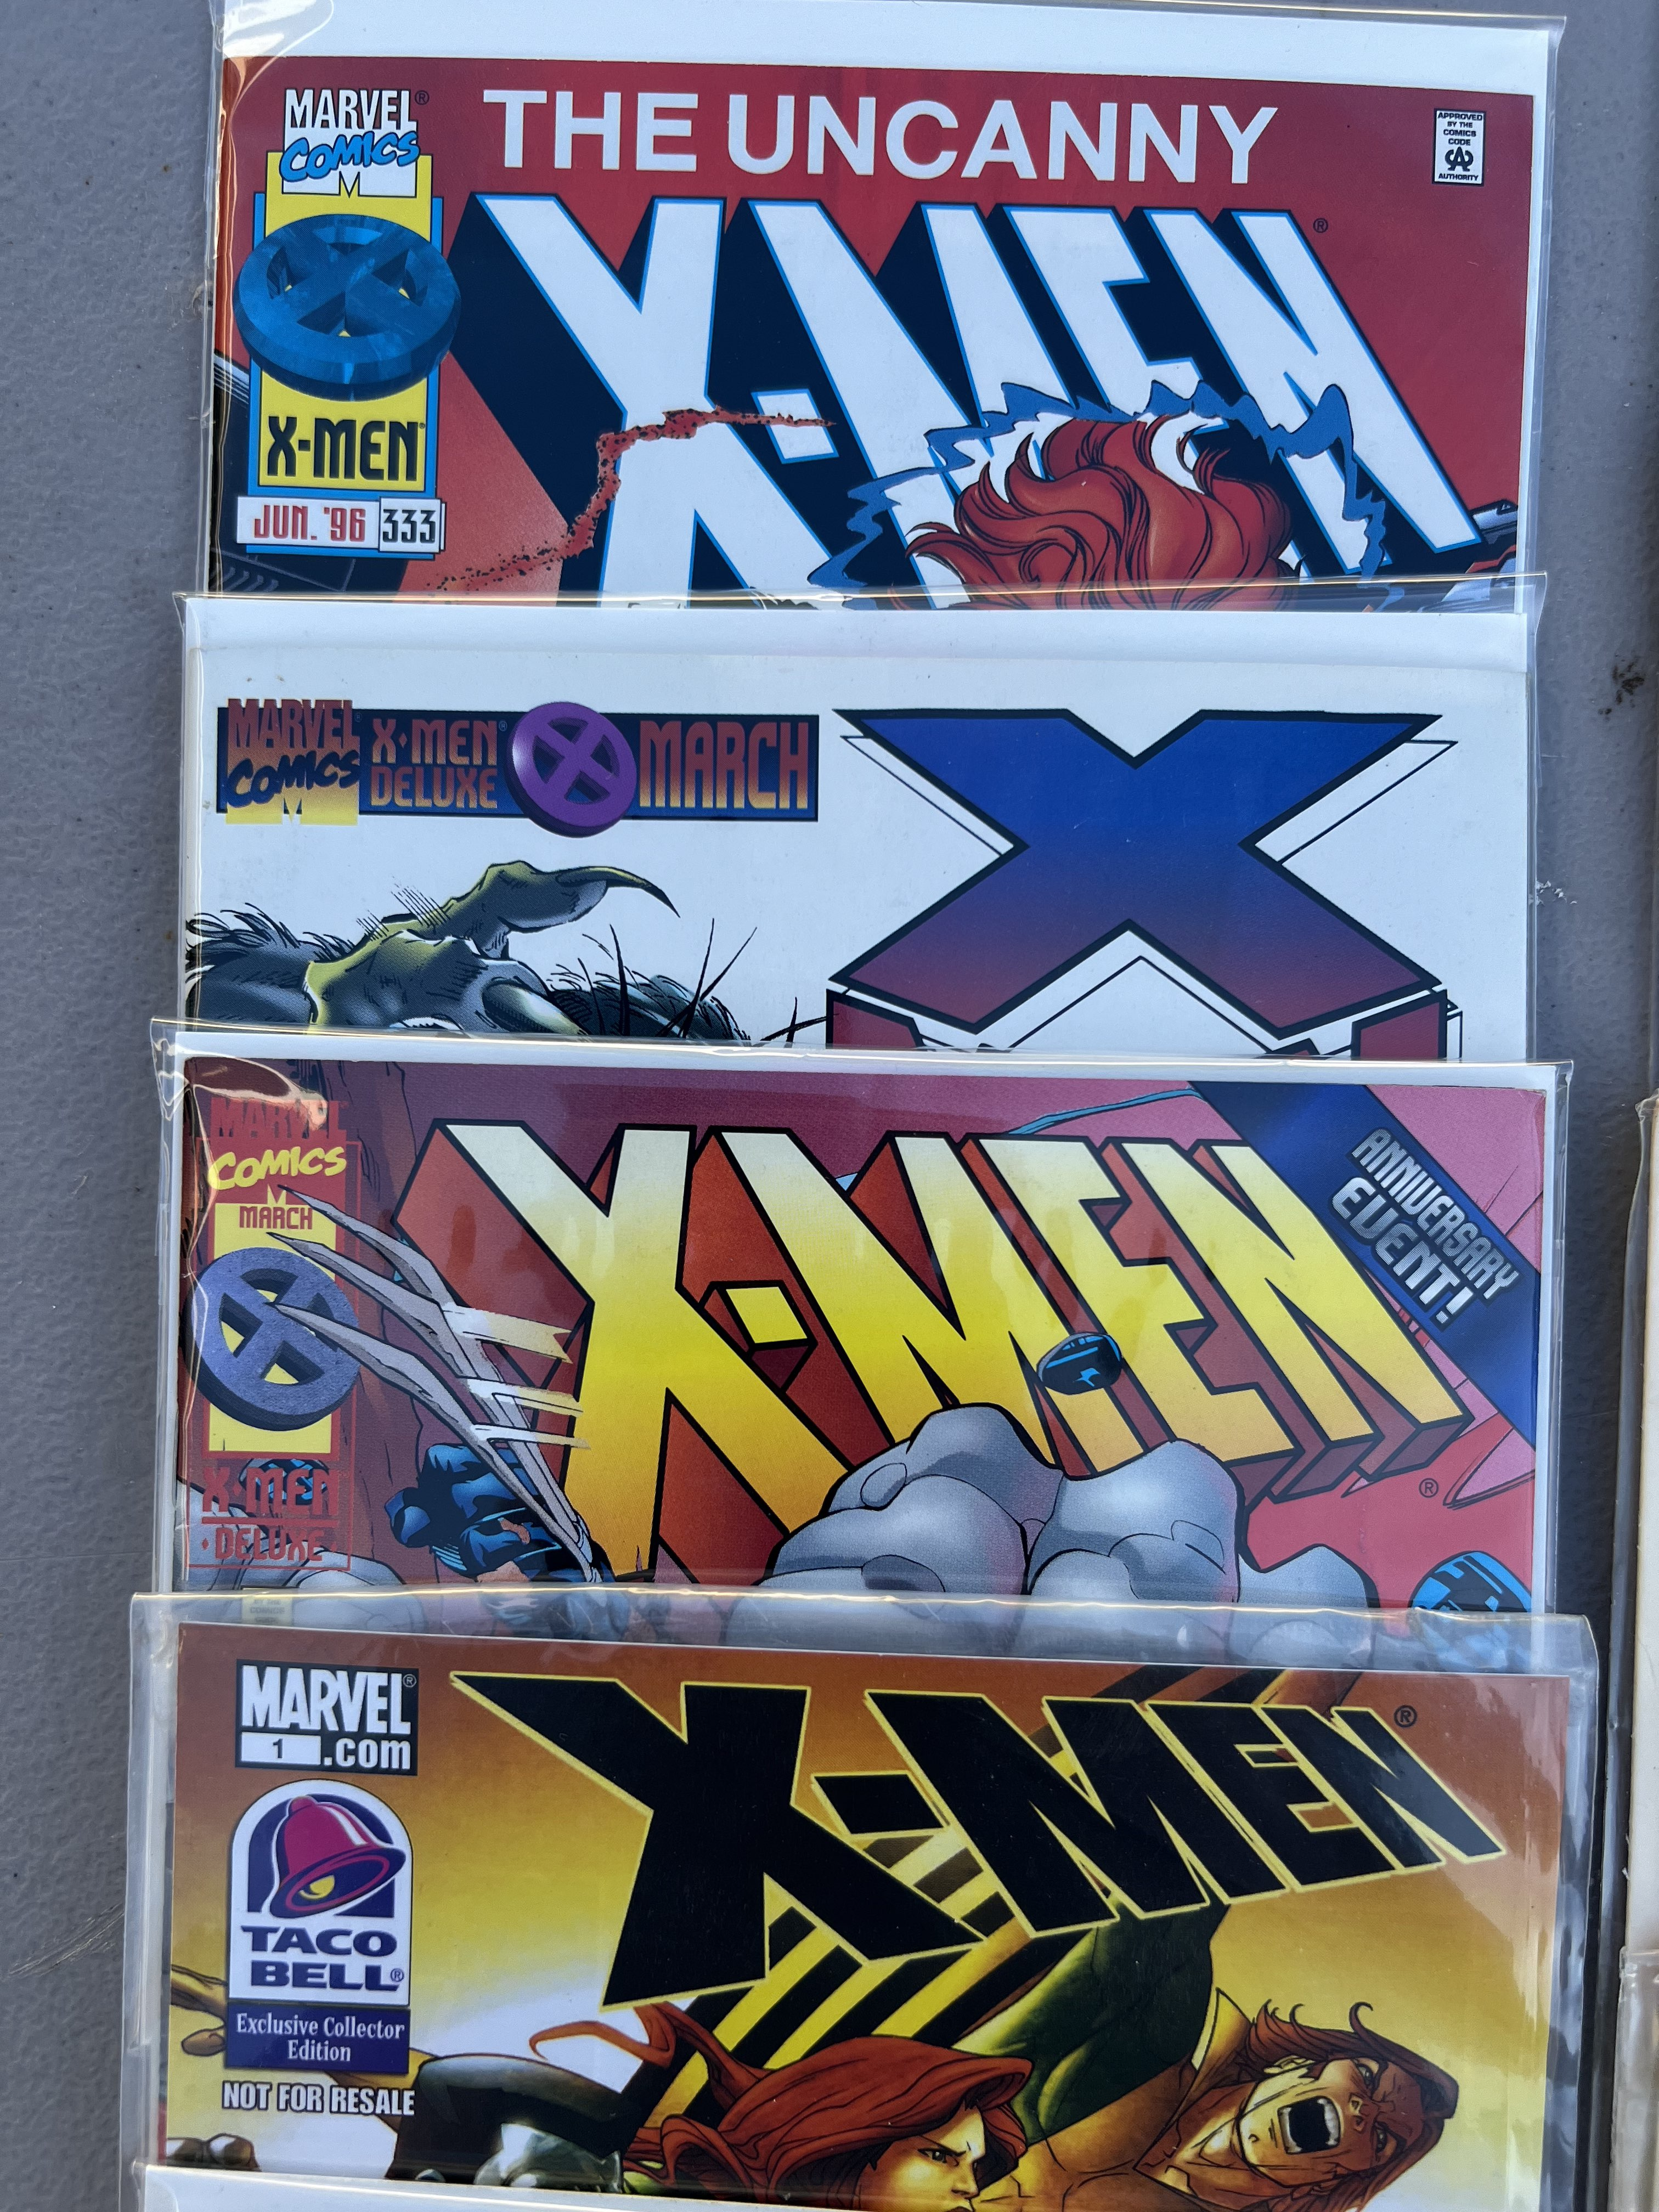 Comic Book X-Men Superman, Damage Control collection lot 16